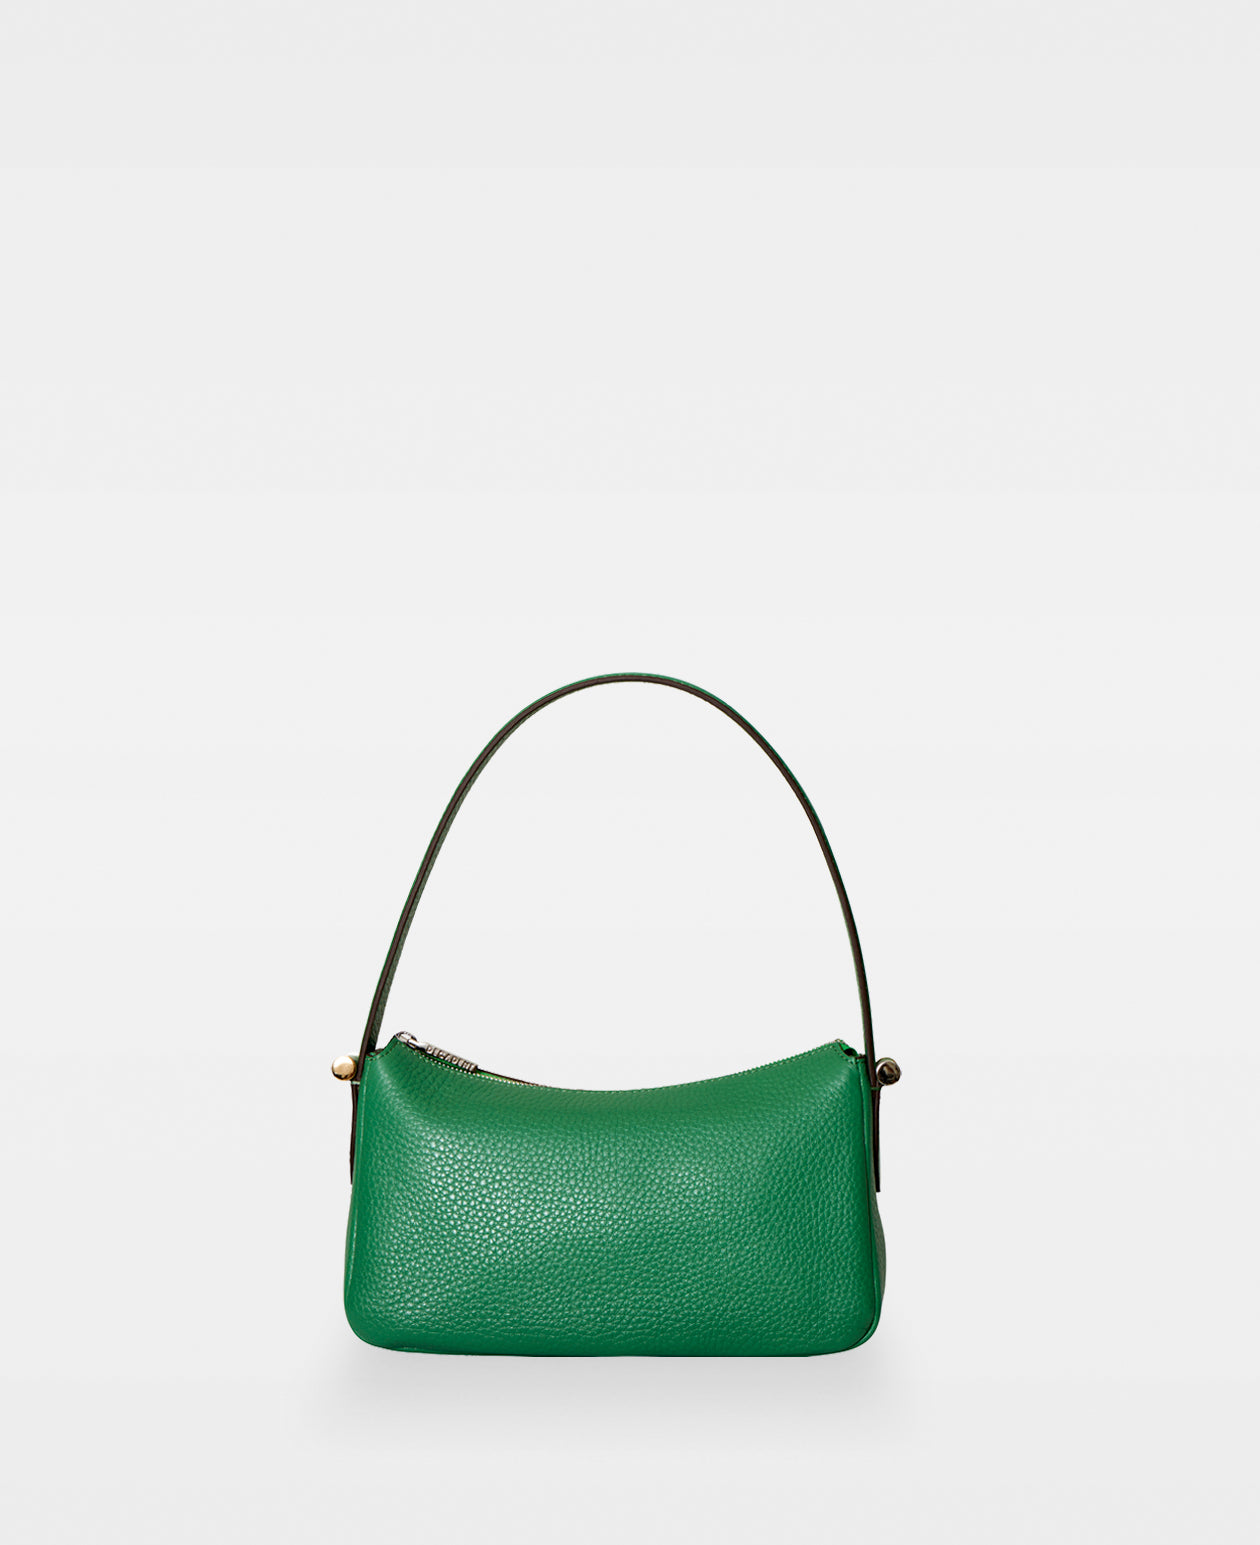 Small Green Bag